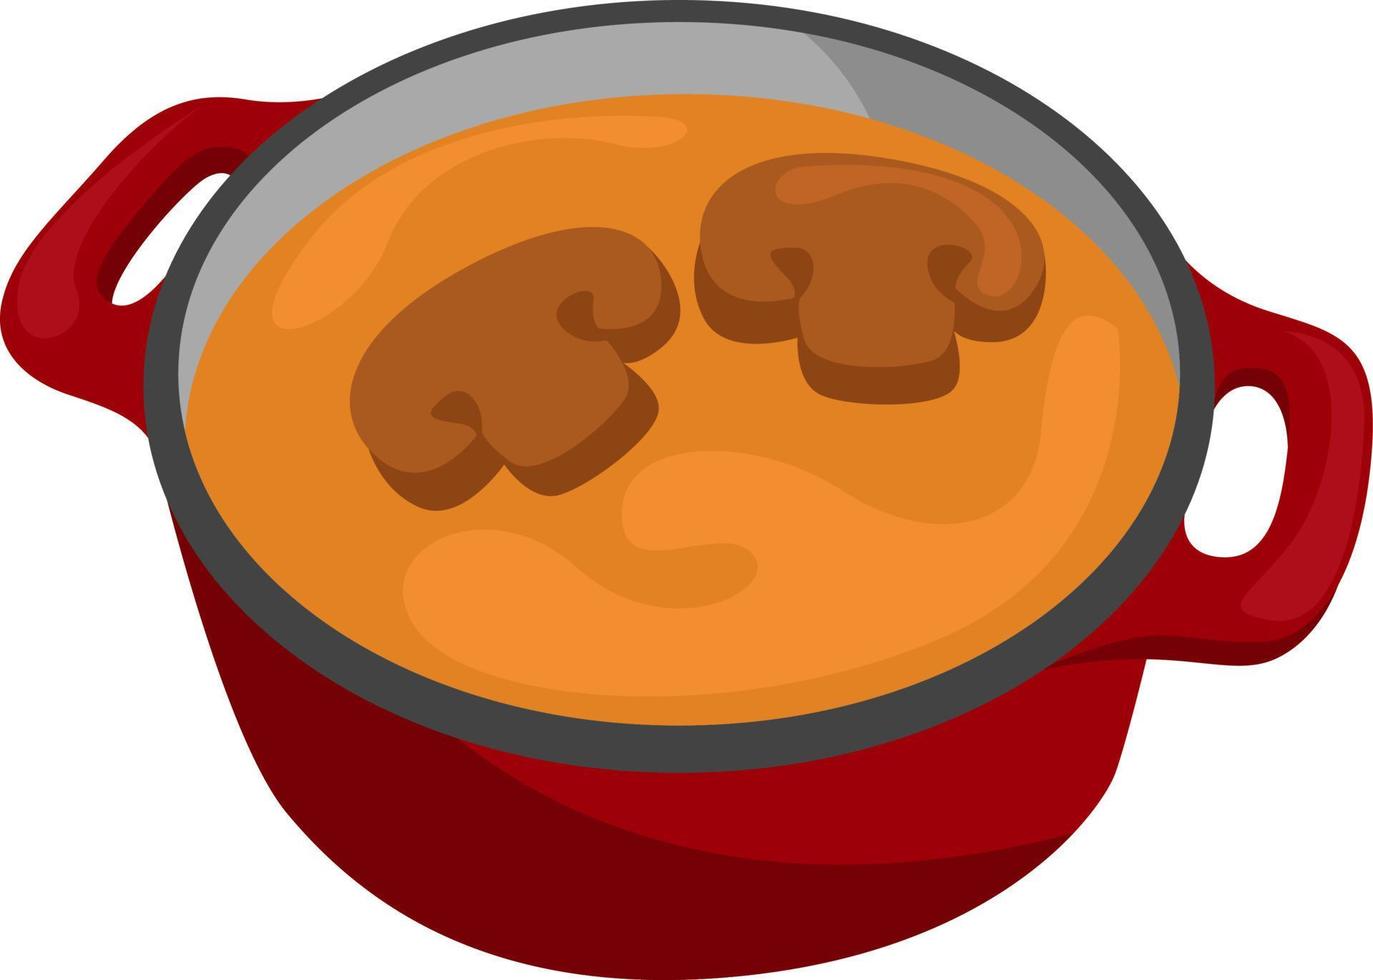 Mushroom soup, illustration, vector on white background